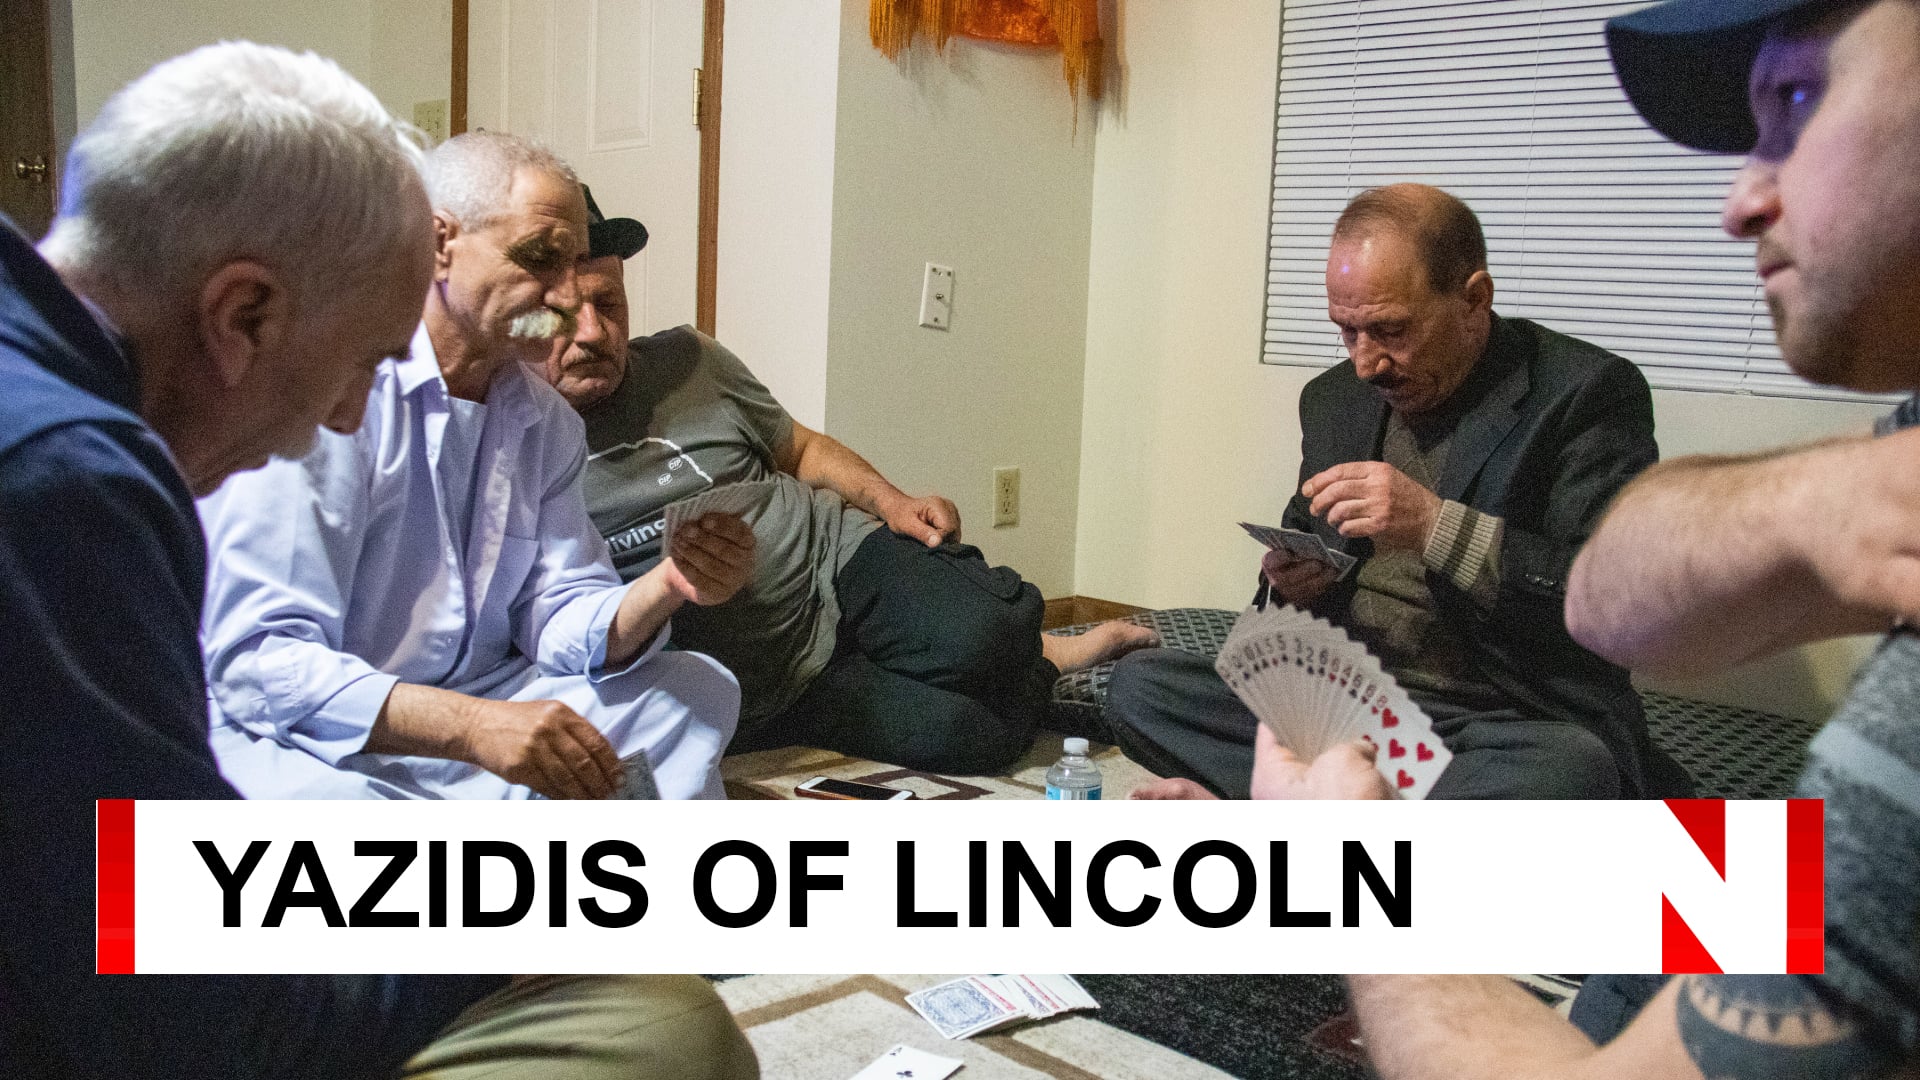 Nebraska News Service - Yazidis of Lincoln